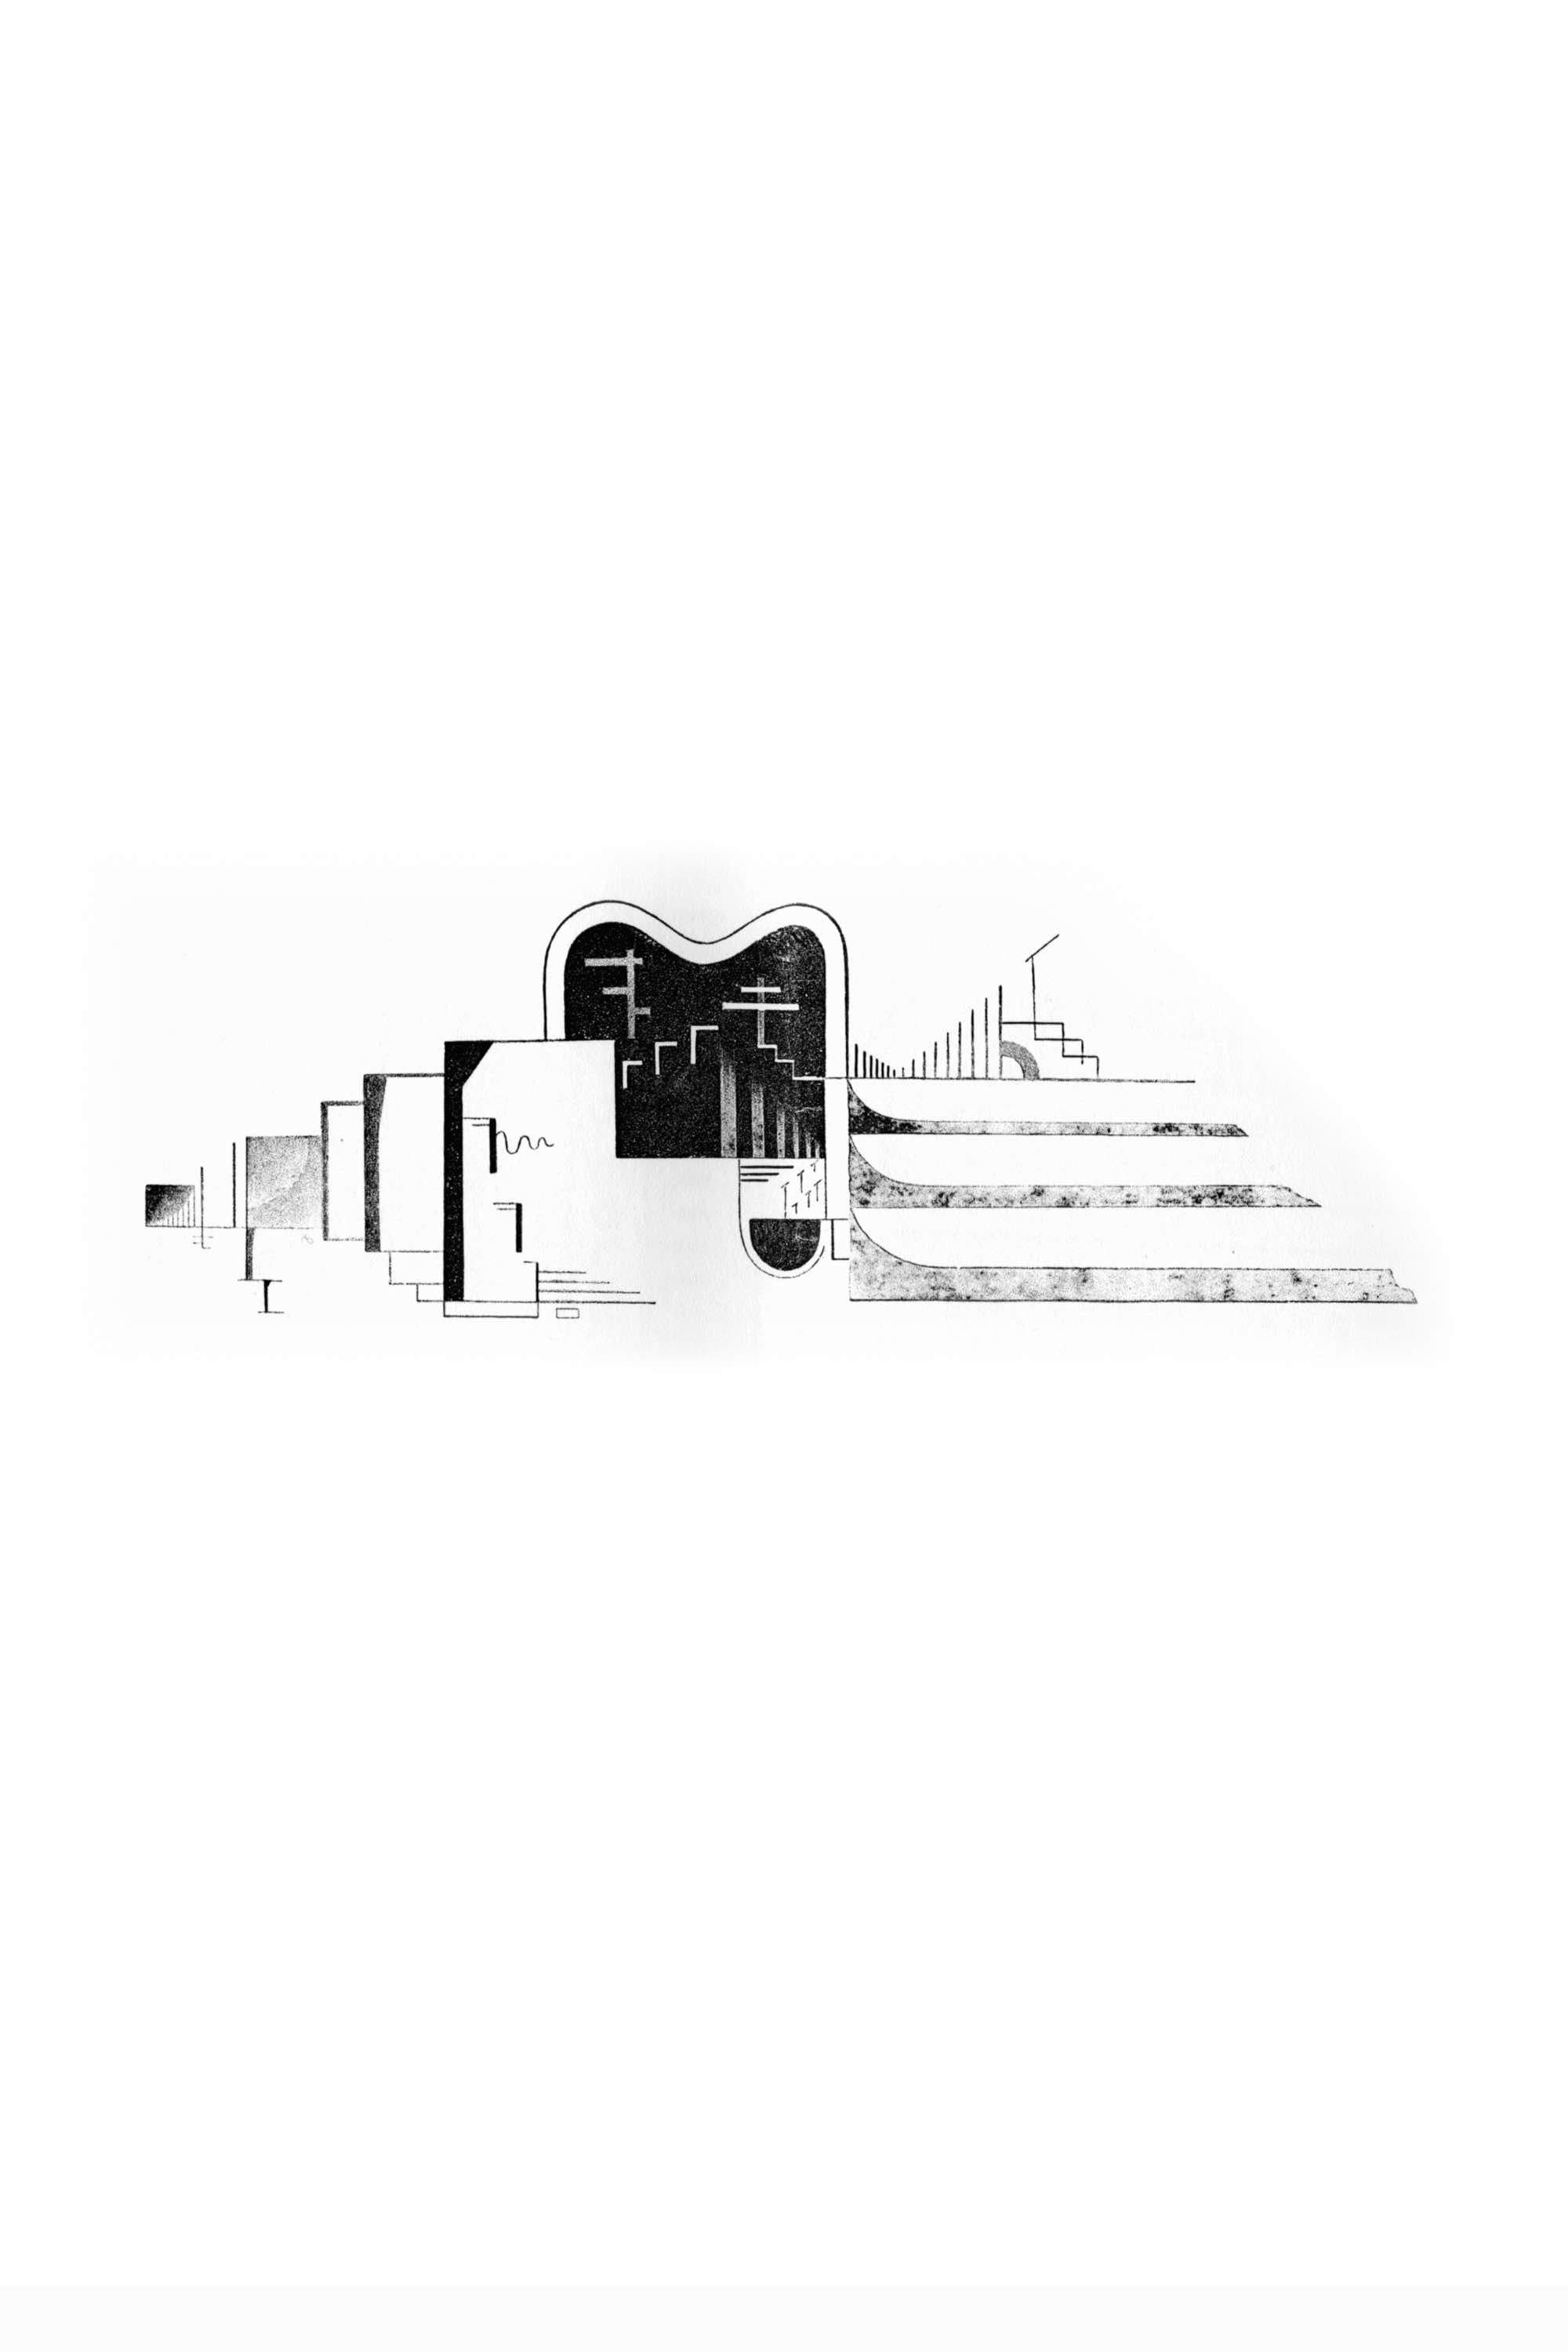 Horizontal-Vertical Orchestra